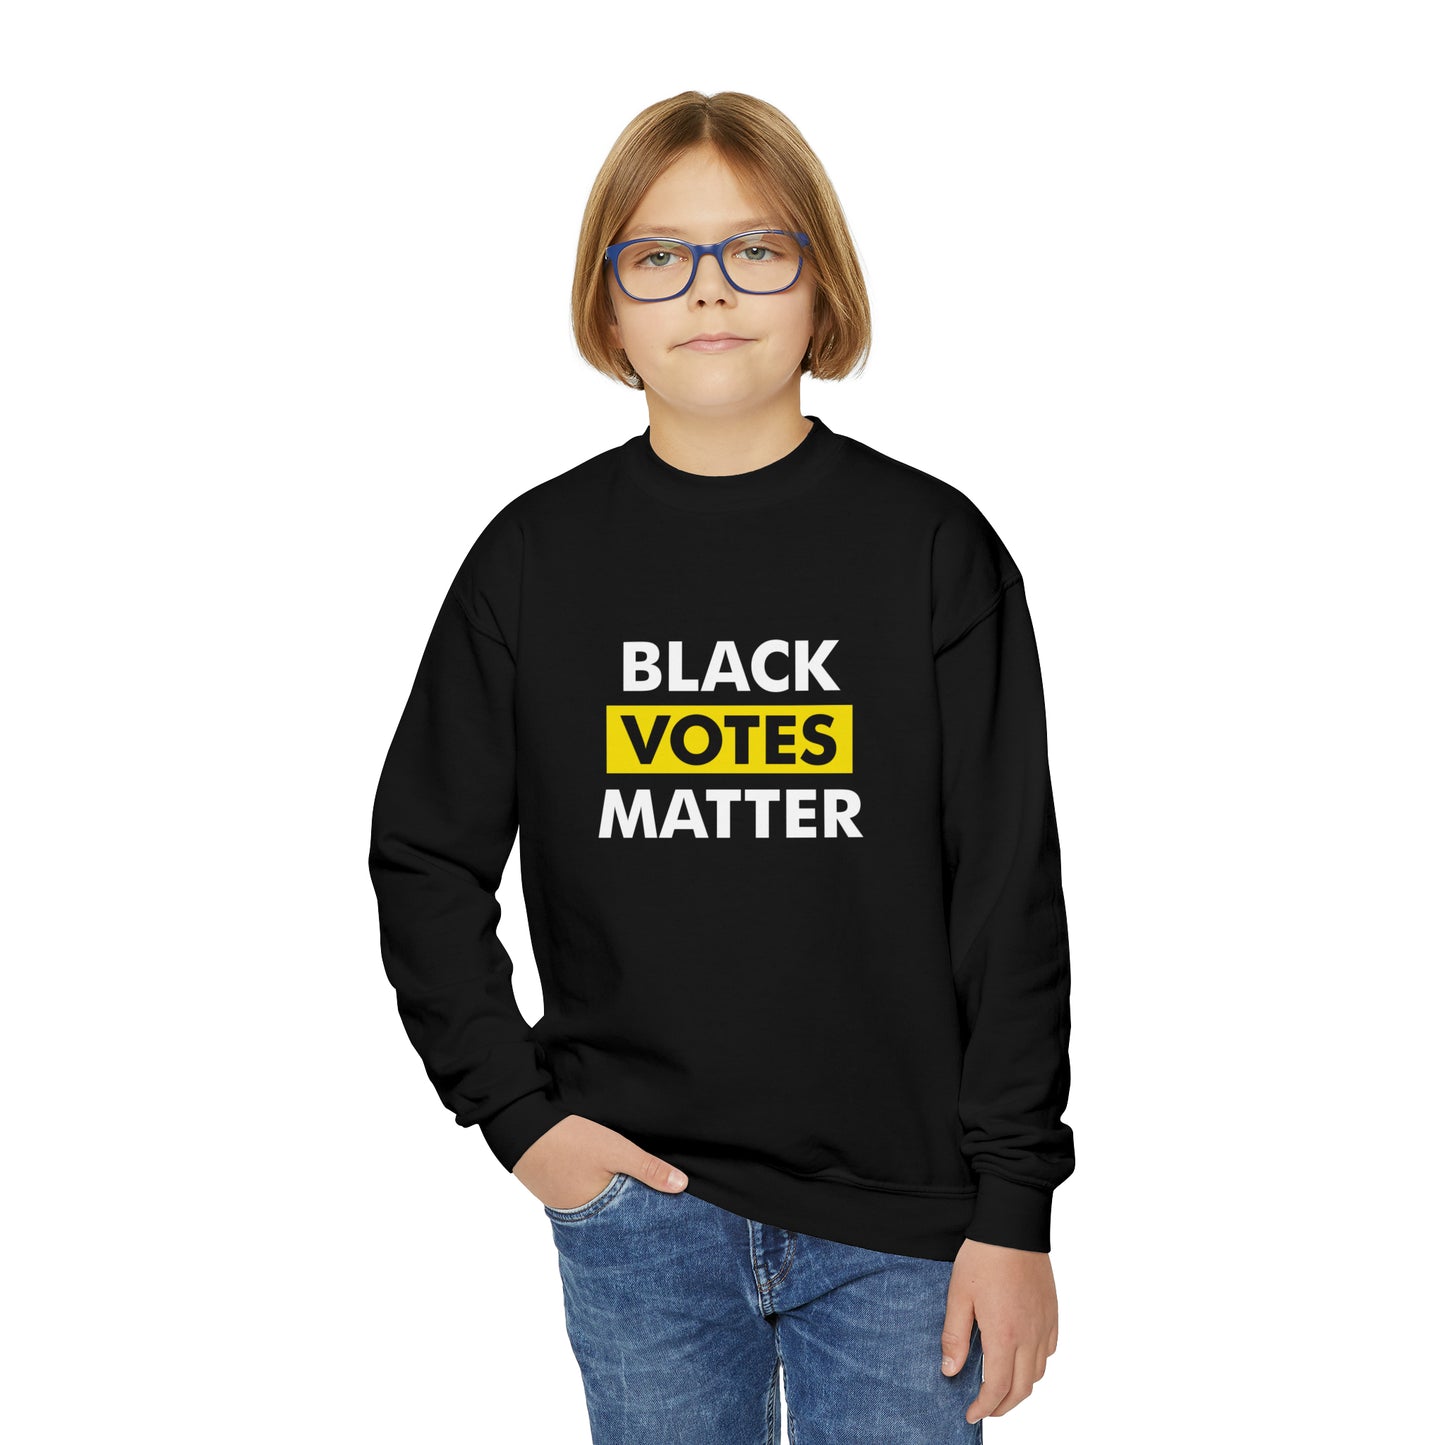 “Black Votes Matter” Youth Sweatshirt